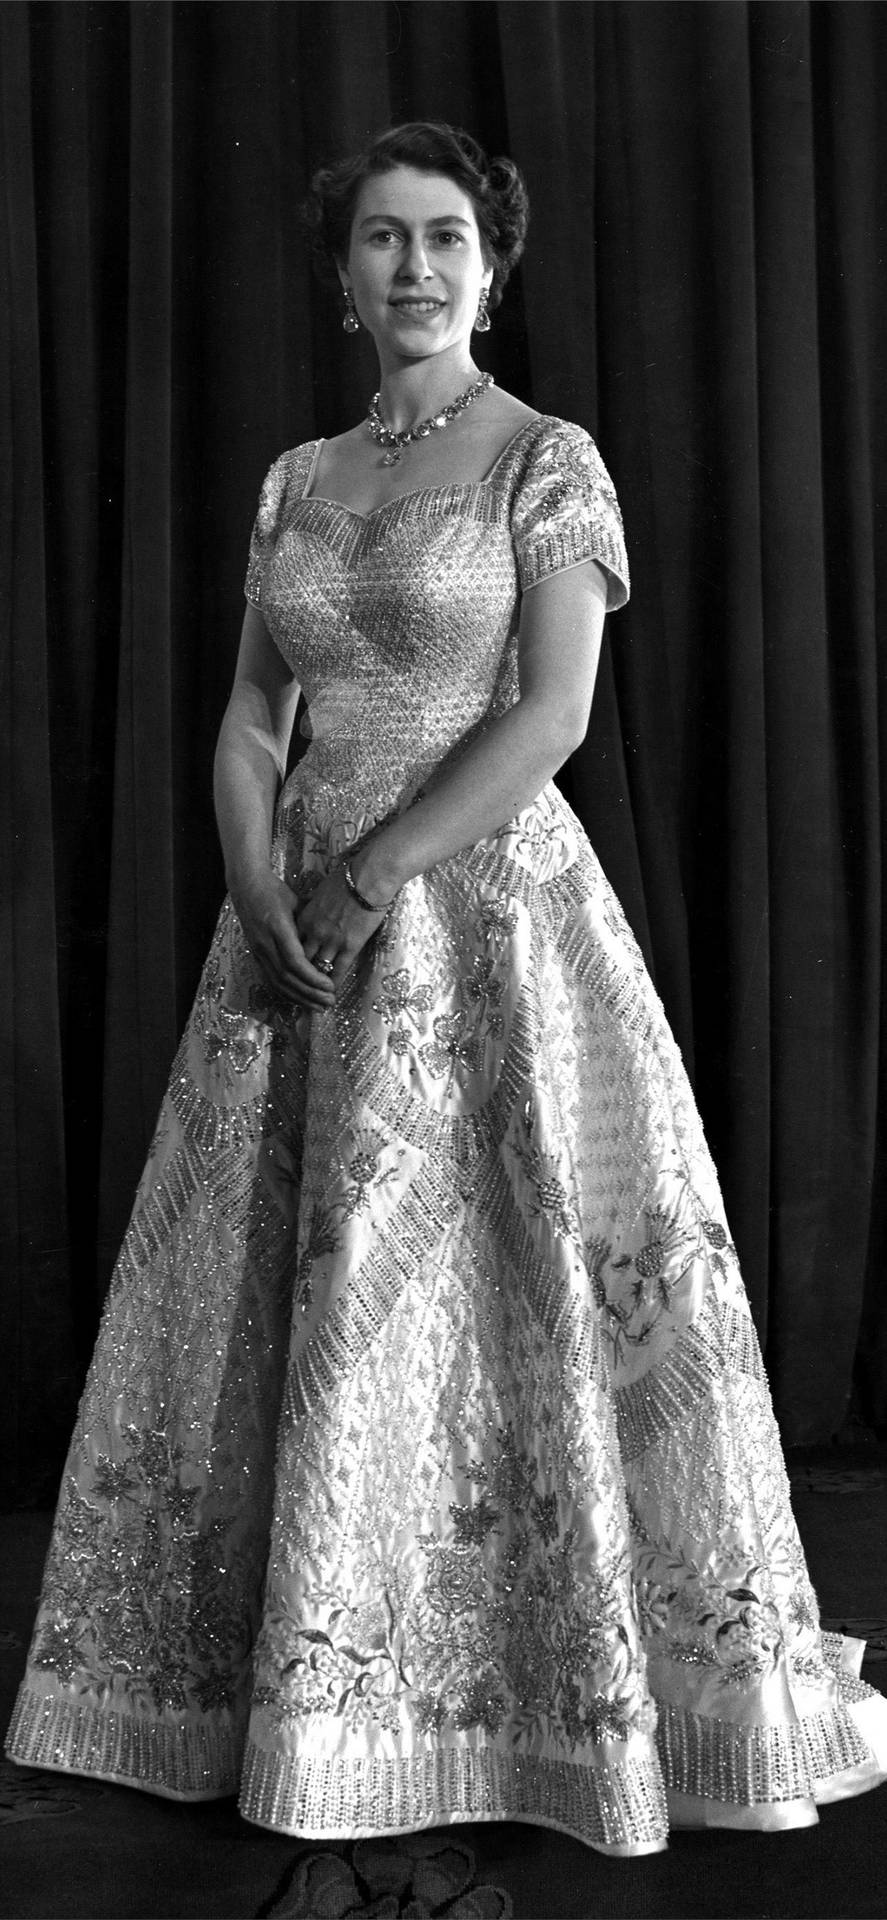 Queen Elizabeth Ii Of Royal Family Background